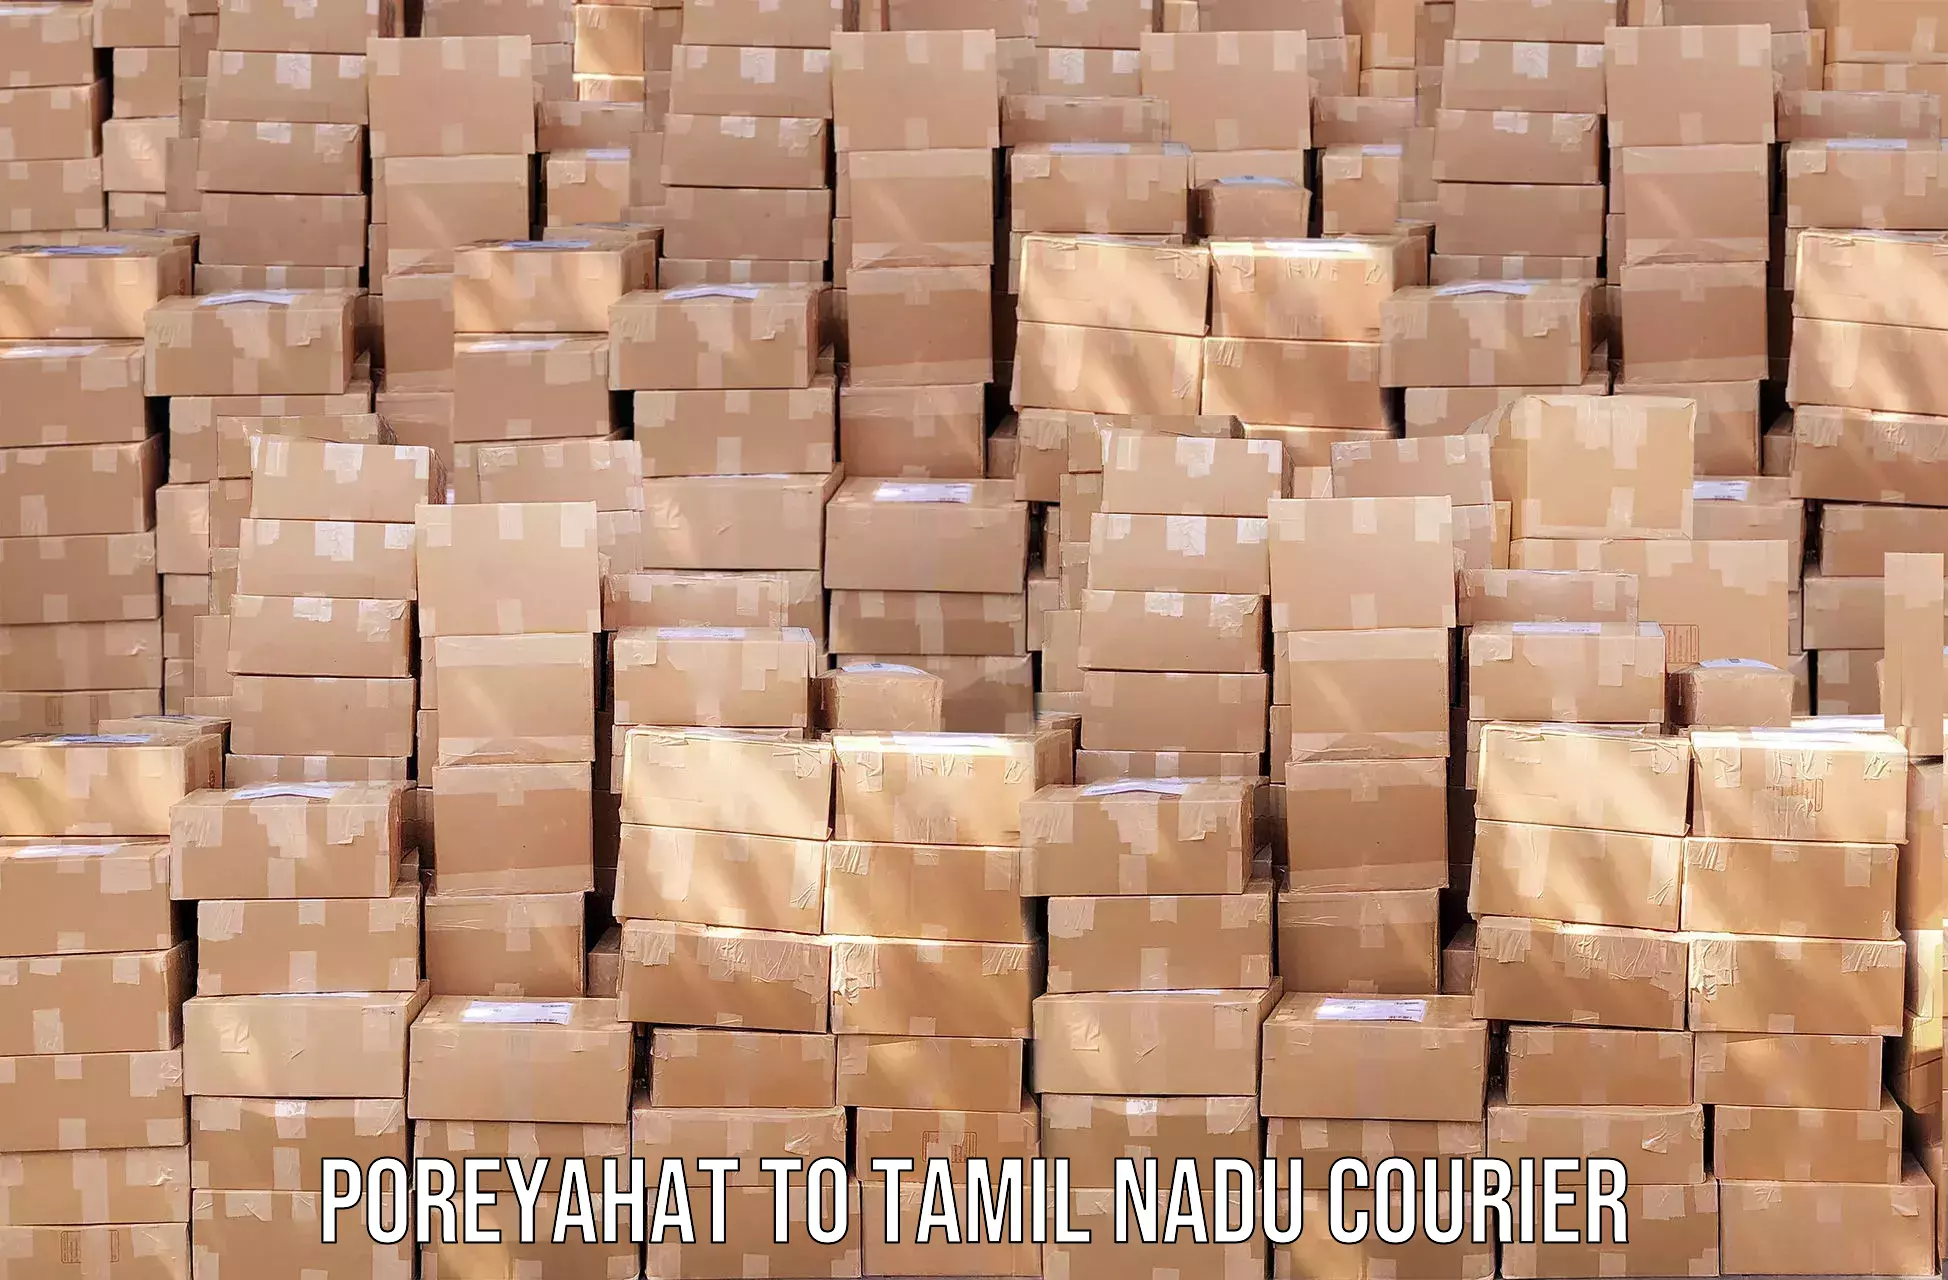 Specialized shipment handling in Poreyahat to Tamil Nadu